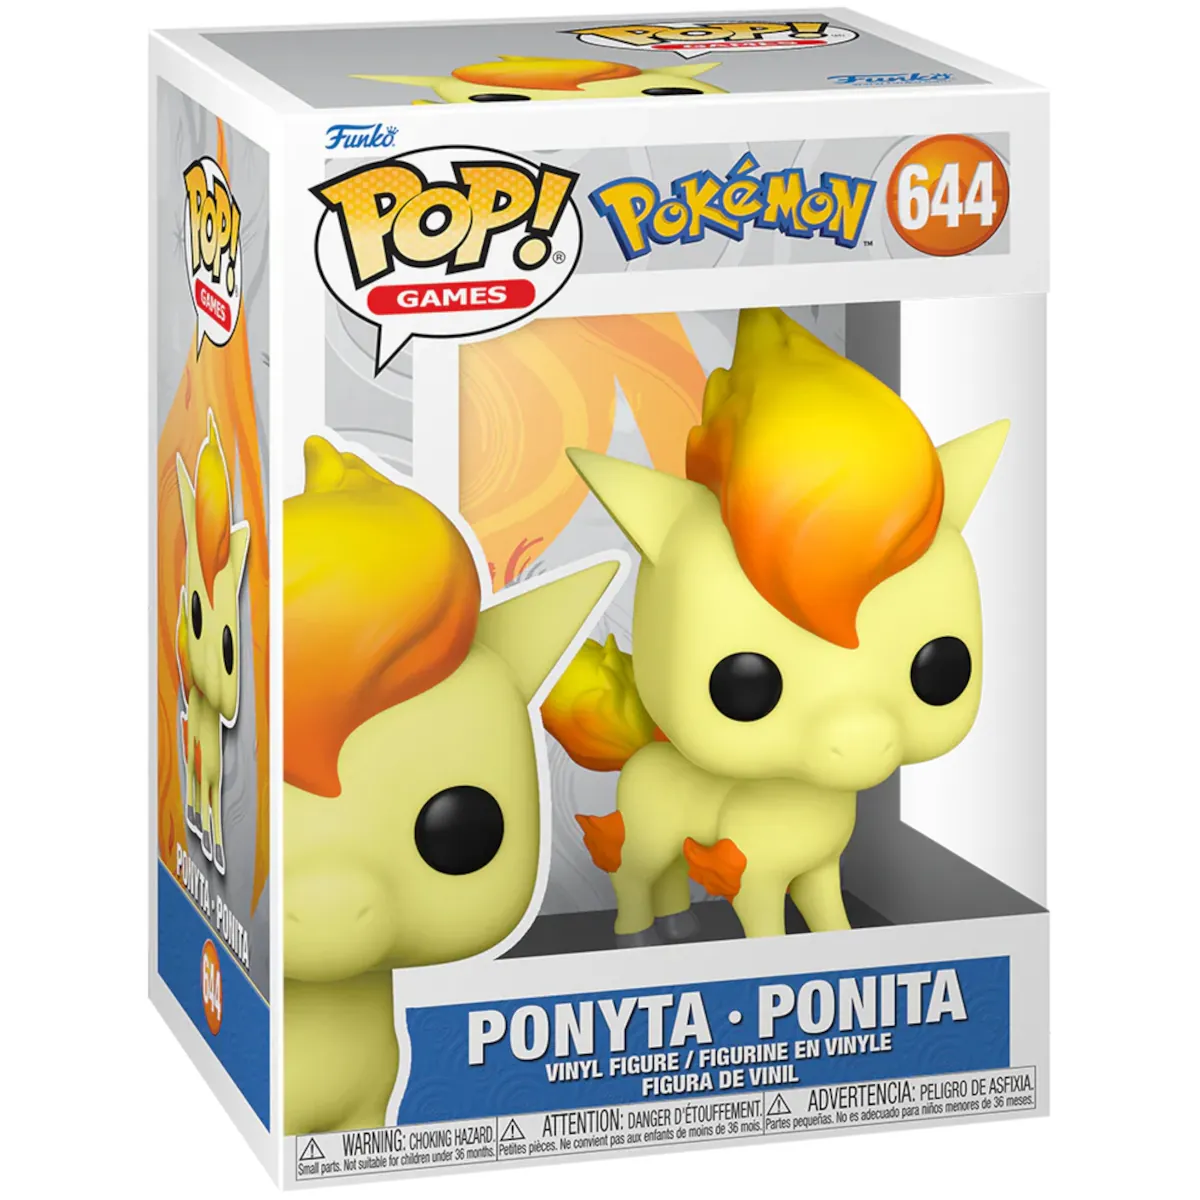 74228 Funko Pop! Games - Pokémon - Ponyta Collectable Vinyl Figure Box Front